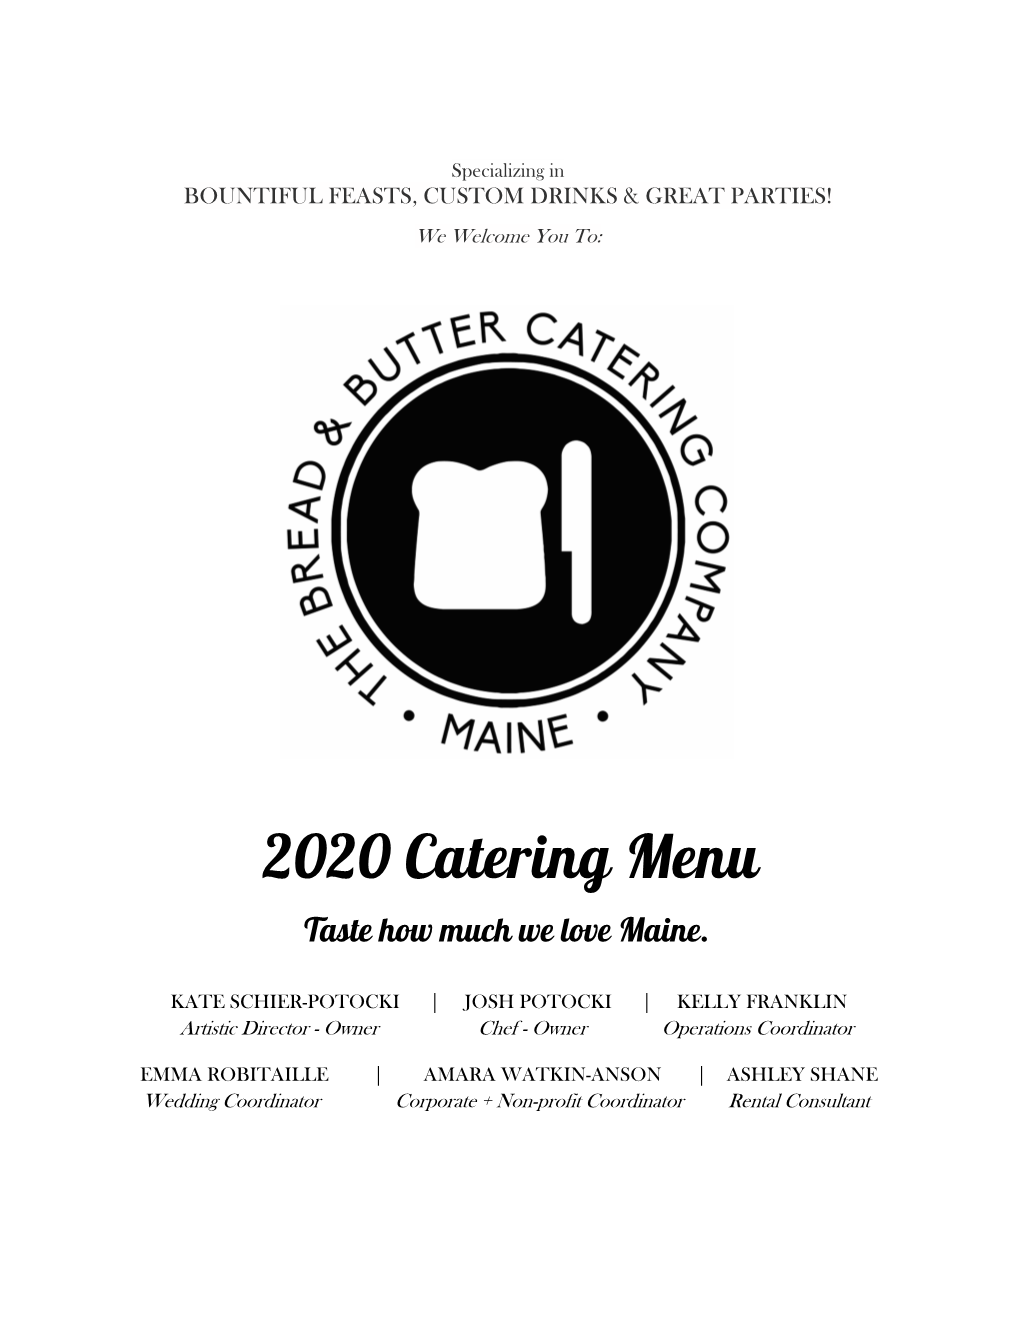 2020 Catering Menu Taste How Much We Love Maine